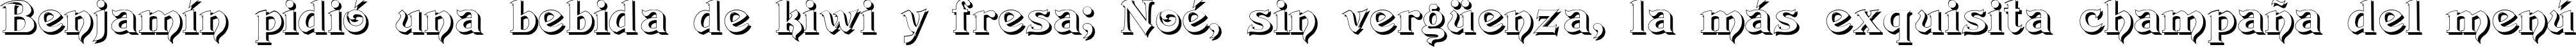 Пример написания шрифтом Devinne Swash Shadow текста на испанском